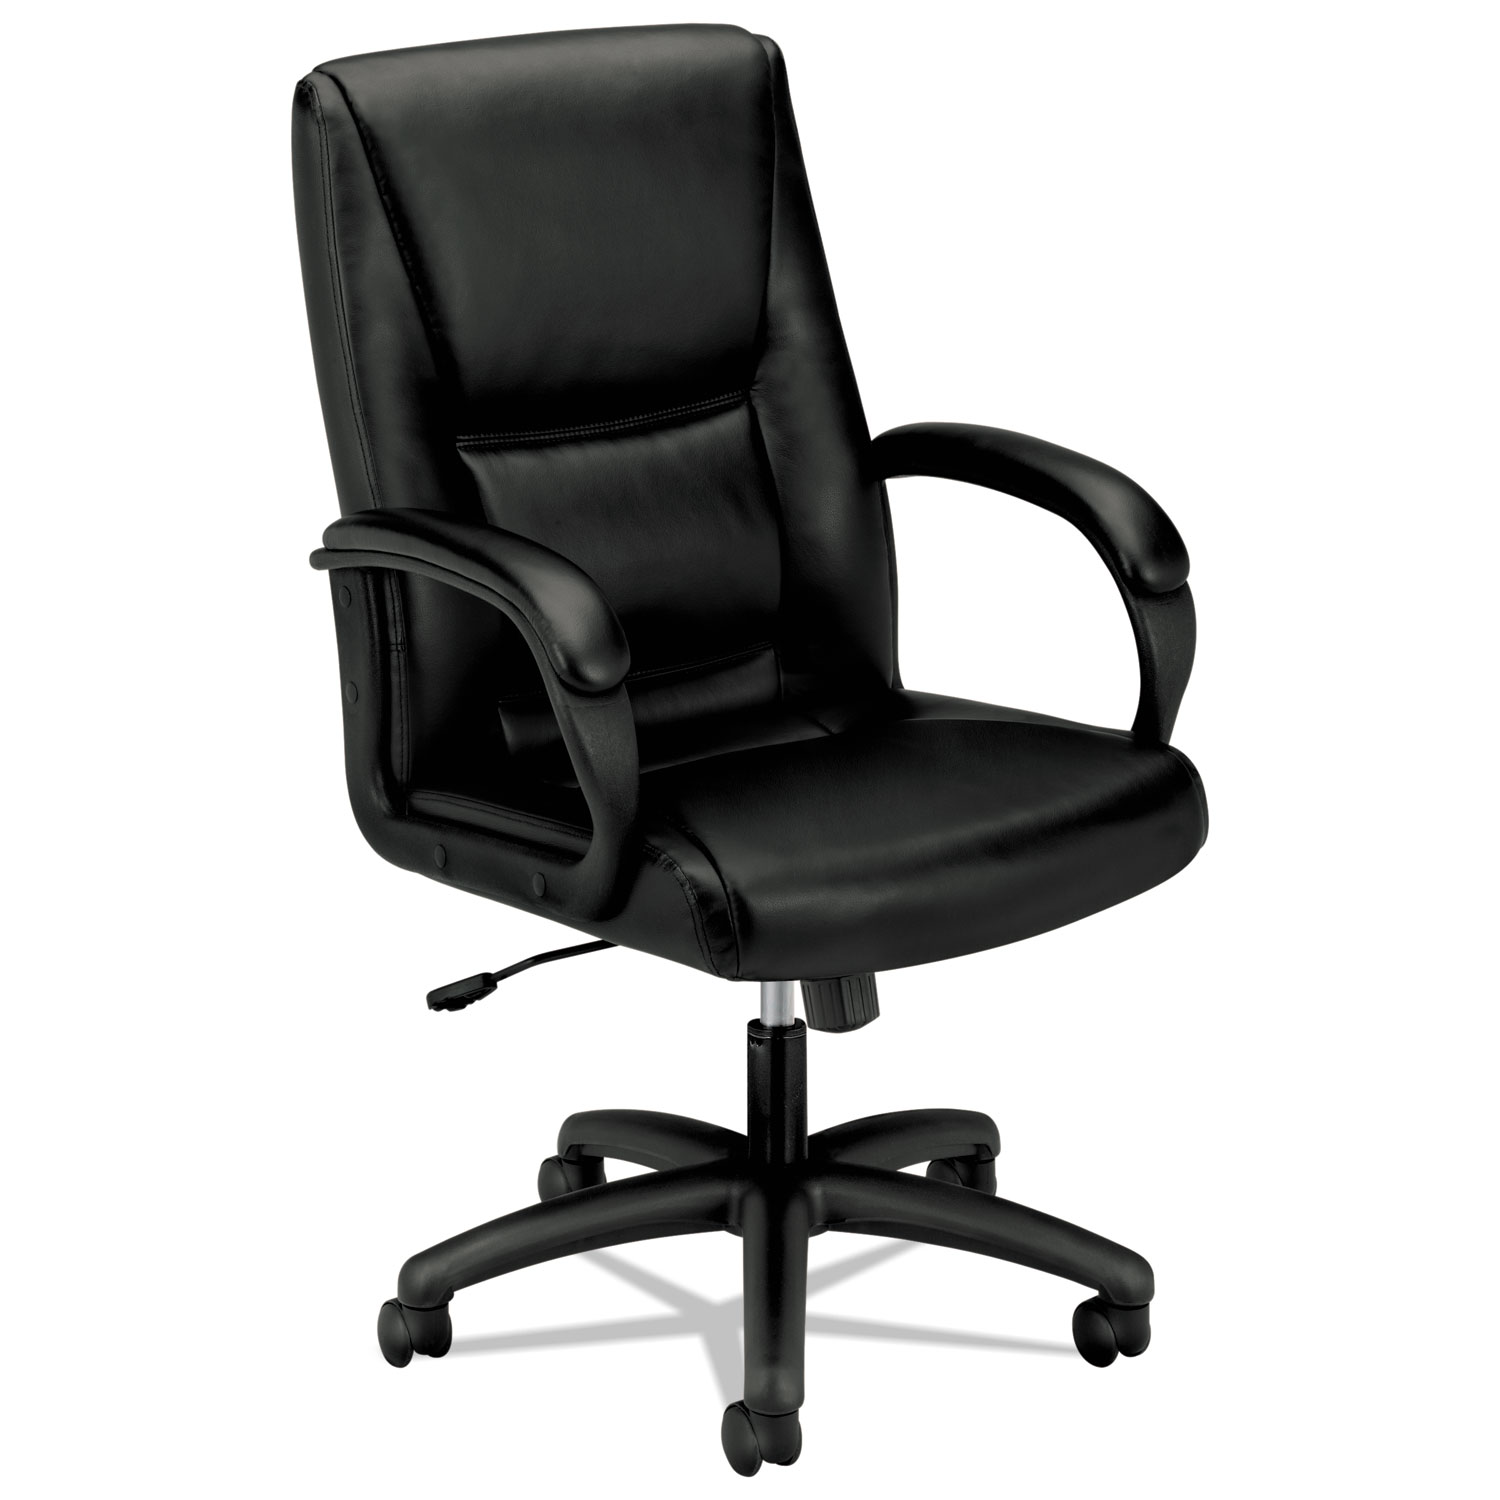  HON HVL161.SB11 HVL161 Executive High-Back Leather Chair, Supports up to 250 lbs., Black Seat/Black Back, Black Base (BSXVL161SB11) 